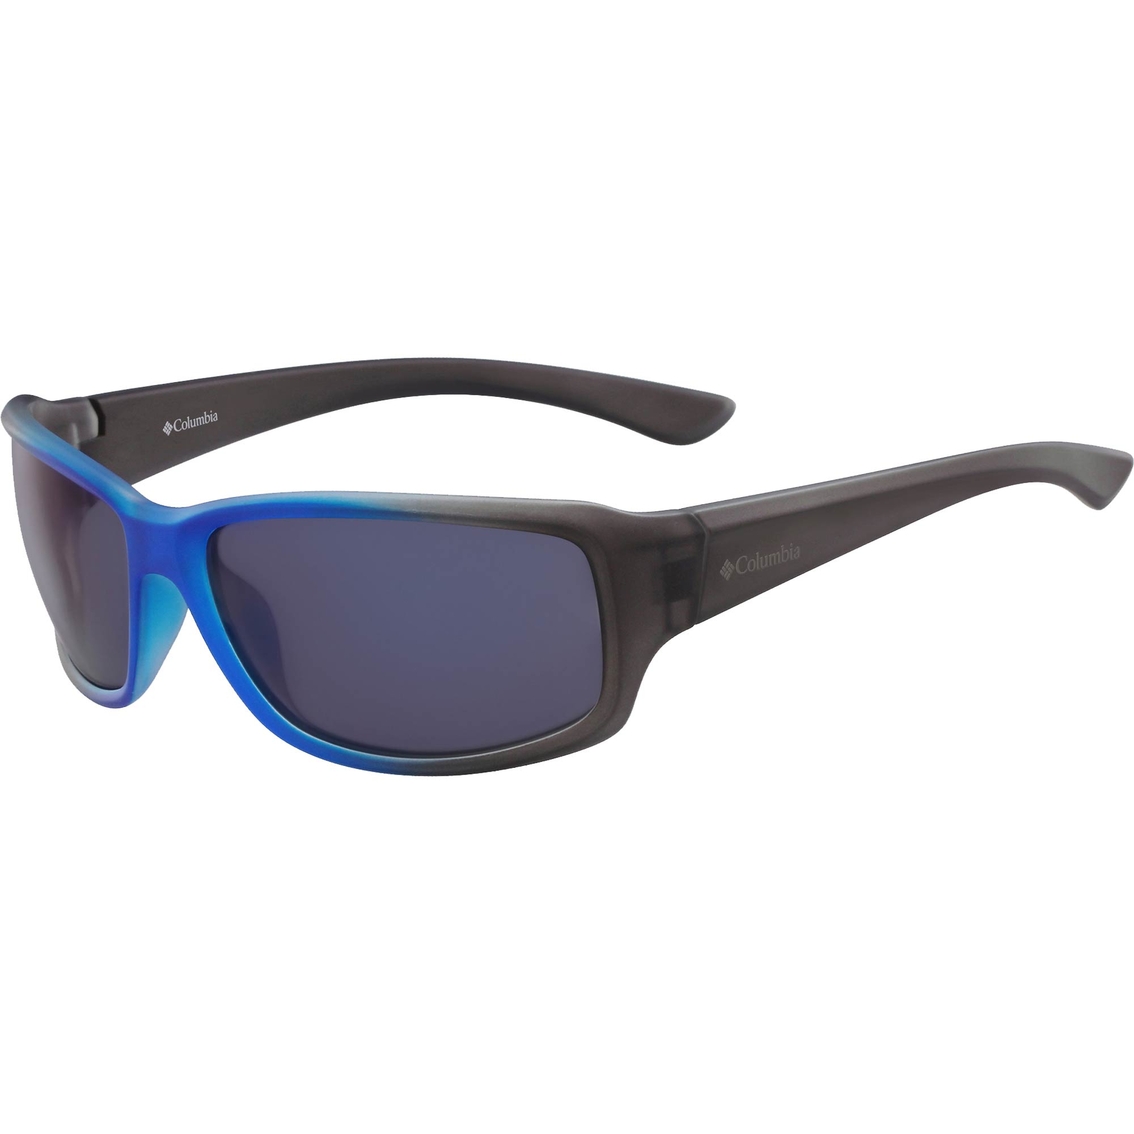 Columbia Point Reyes Polarized Rectangular Sunglasses C526sp039, Sunglasses, Clothing & Accessories